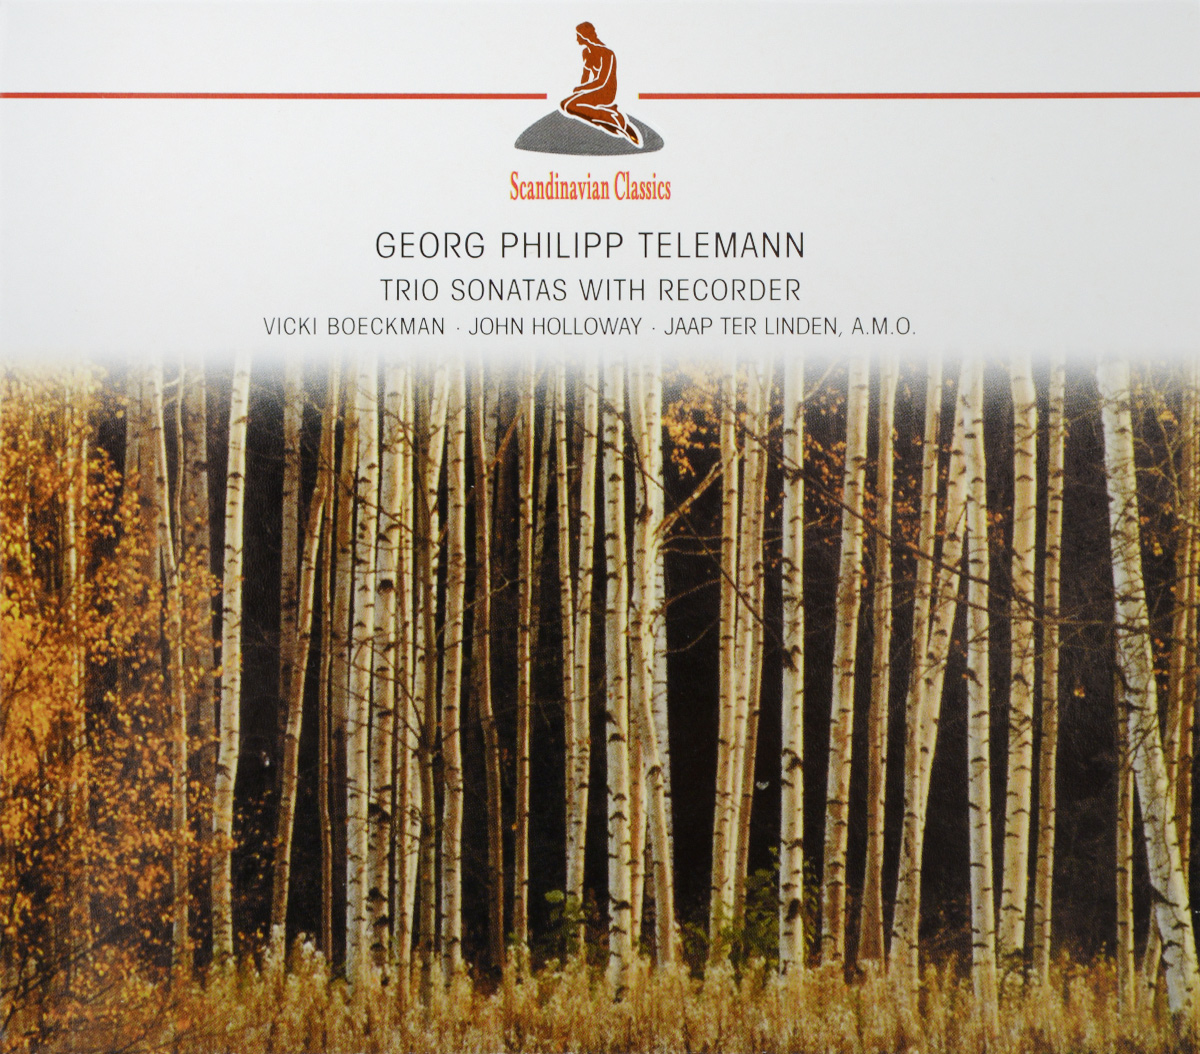 Scandinavian Classics. Vicki Boeckman, John Holloway, Jaap Ter Linden. Georg Philipp Telemann. Trio Sonatas With Recorder